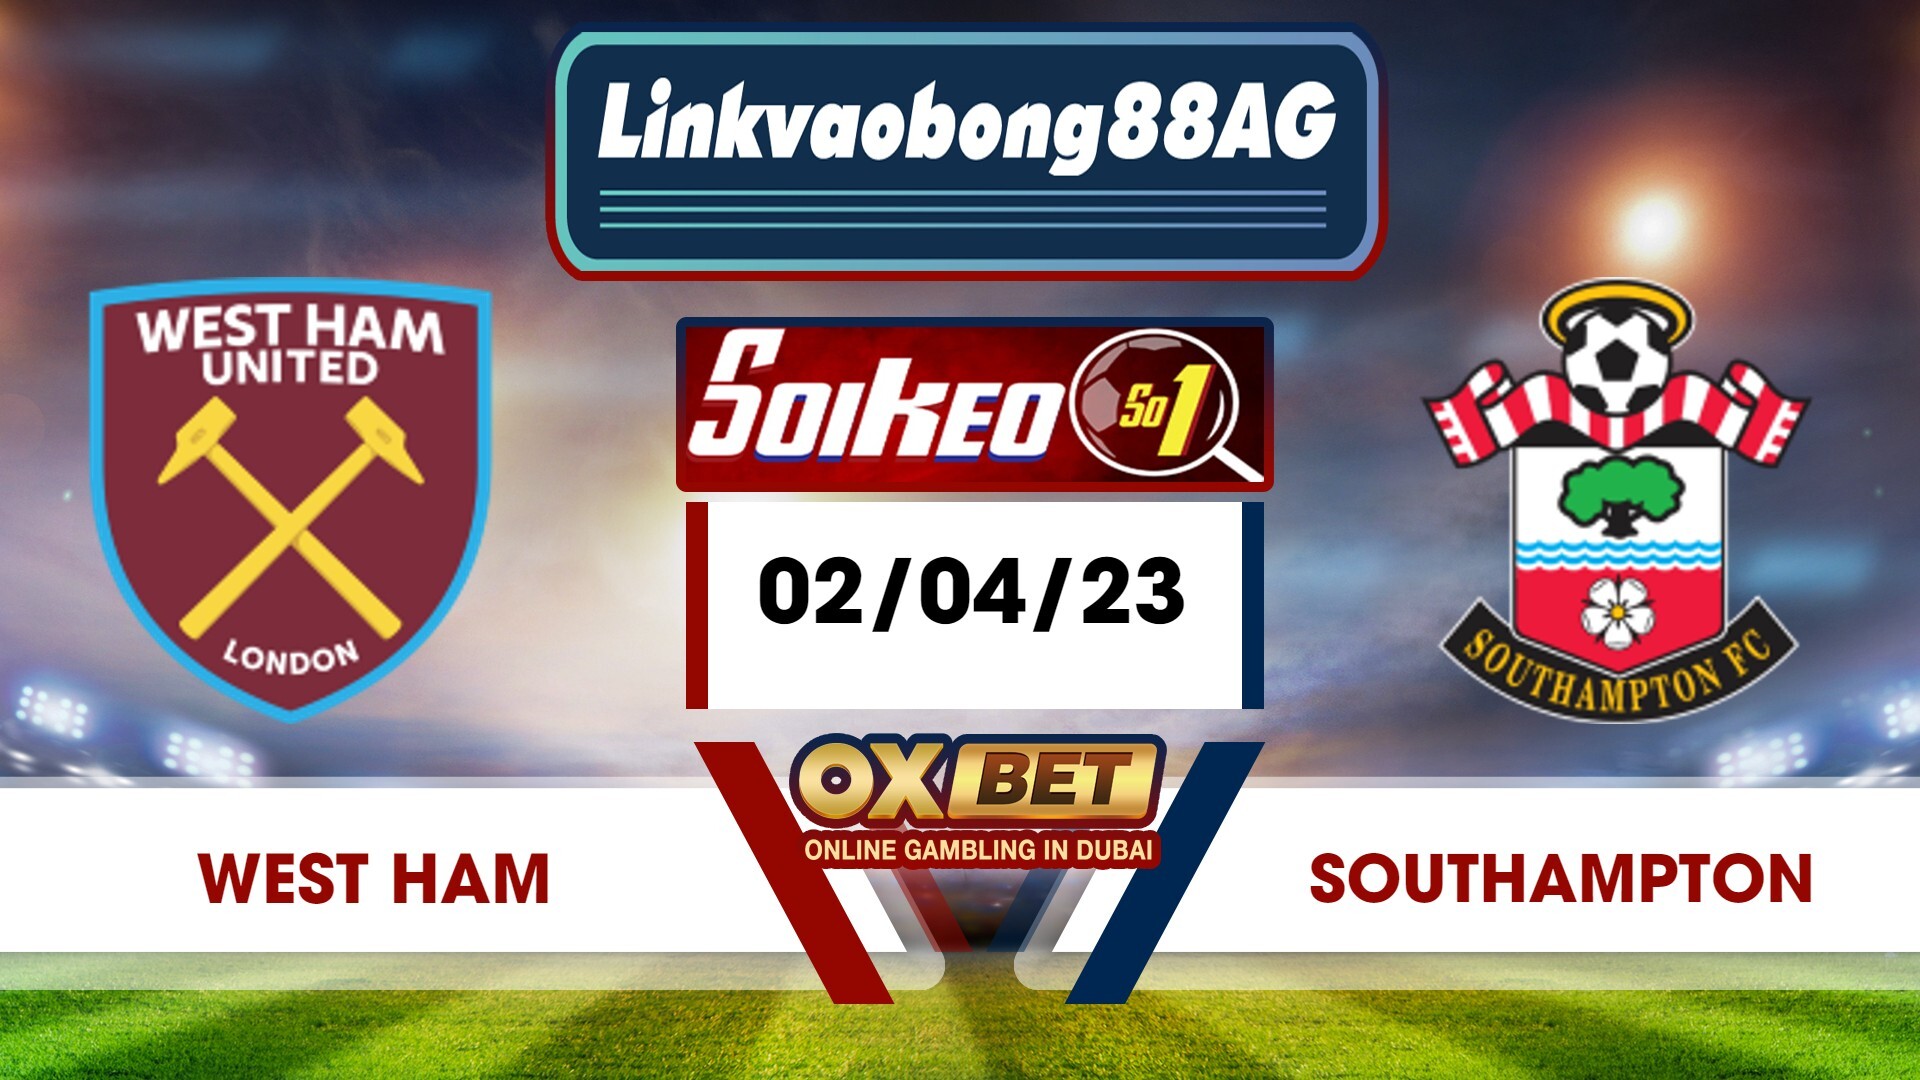 Soi kèo Bong88 West Ham vs Southampton – 02/04/2023 – 20h00 tối